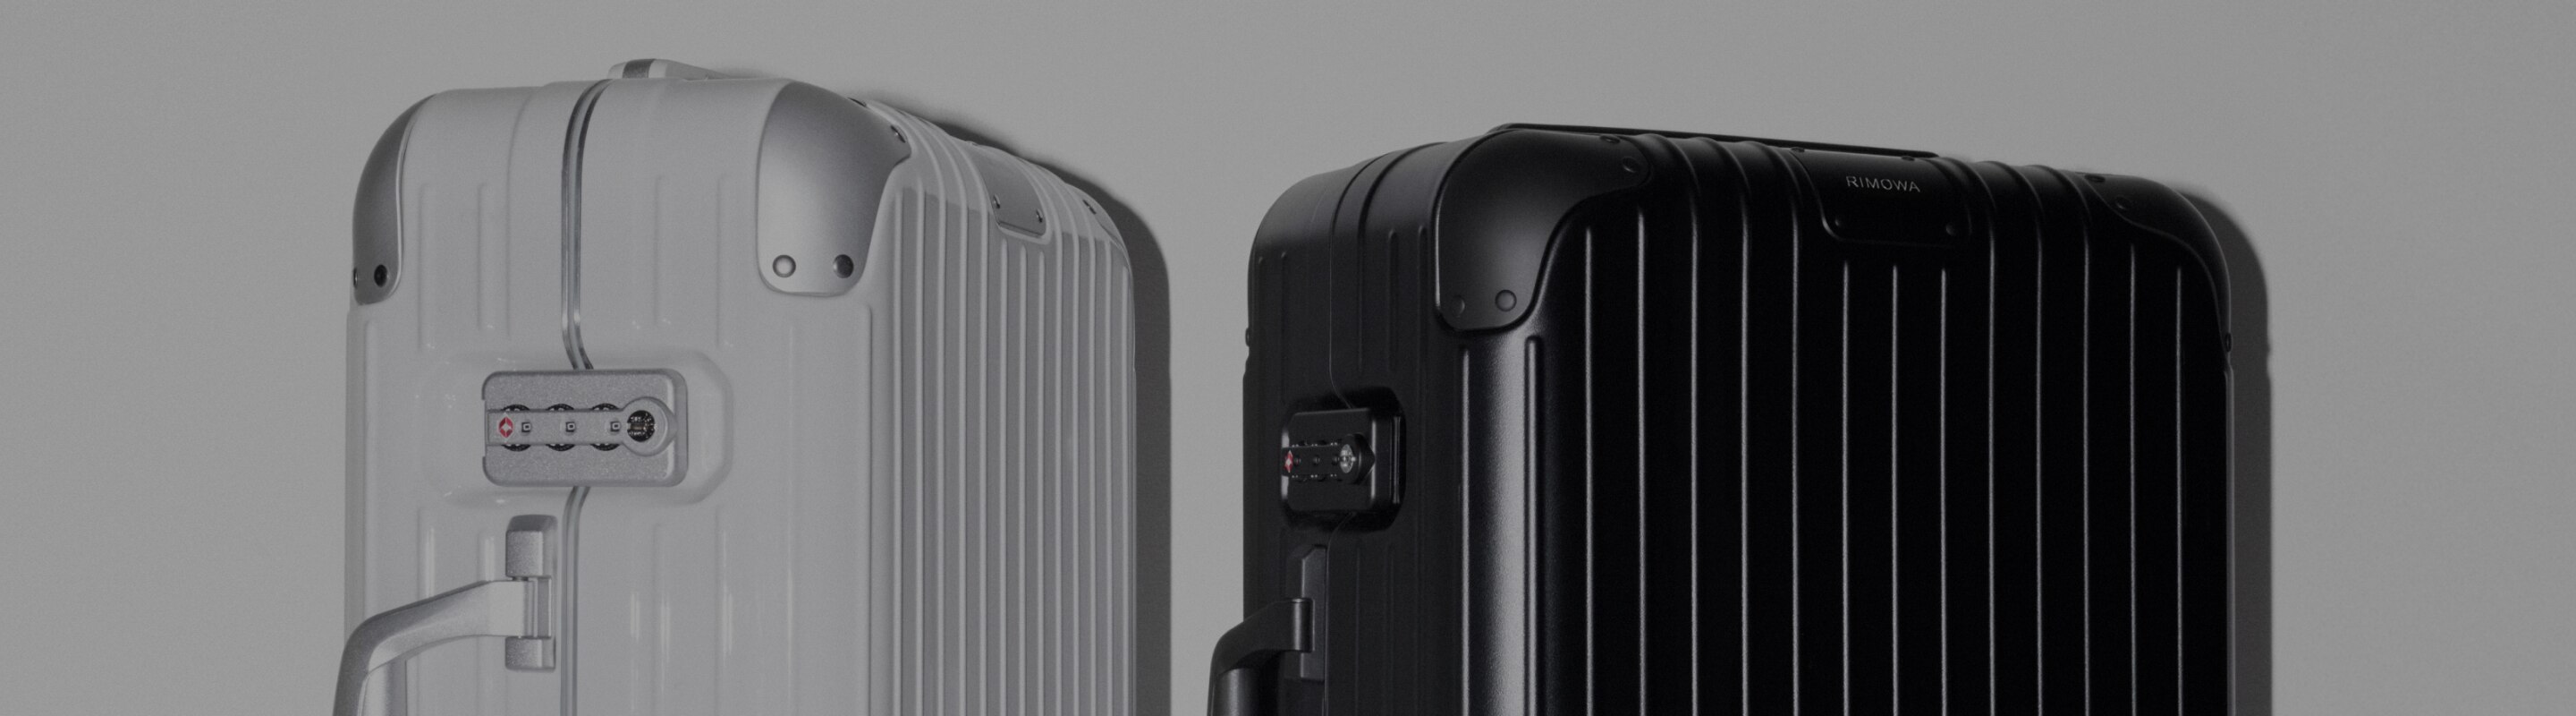 RIMOWA Hybrid: Polycarbonate suitcases with 4 wheels | RIMOWA